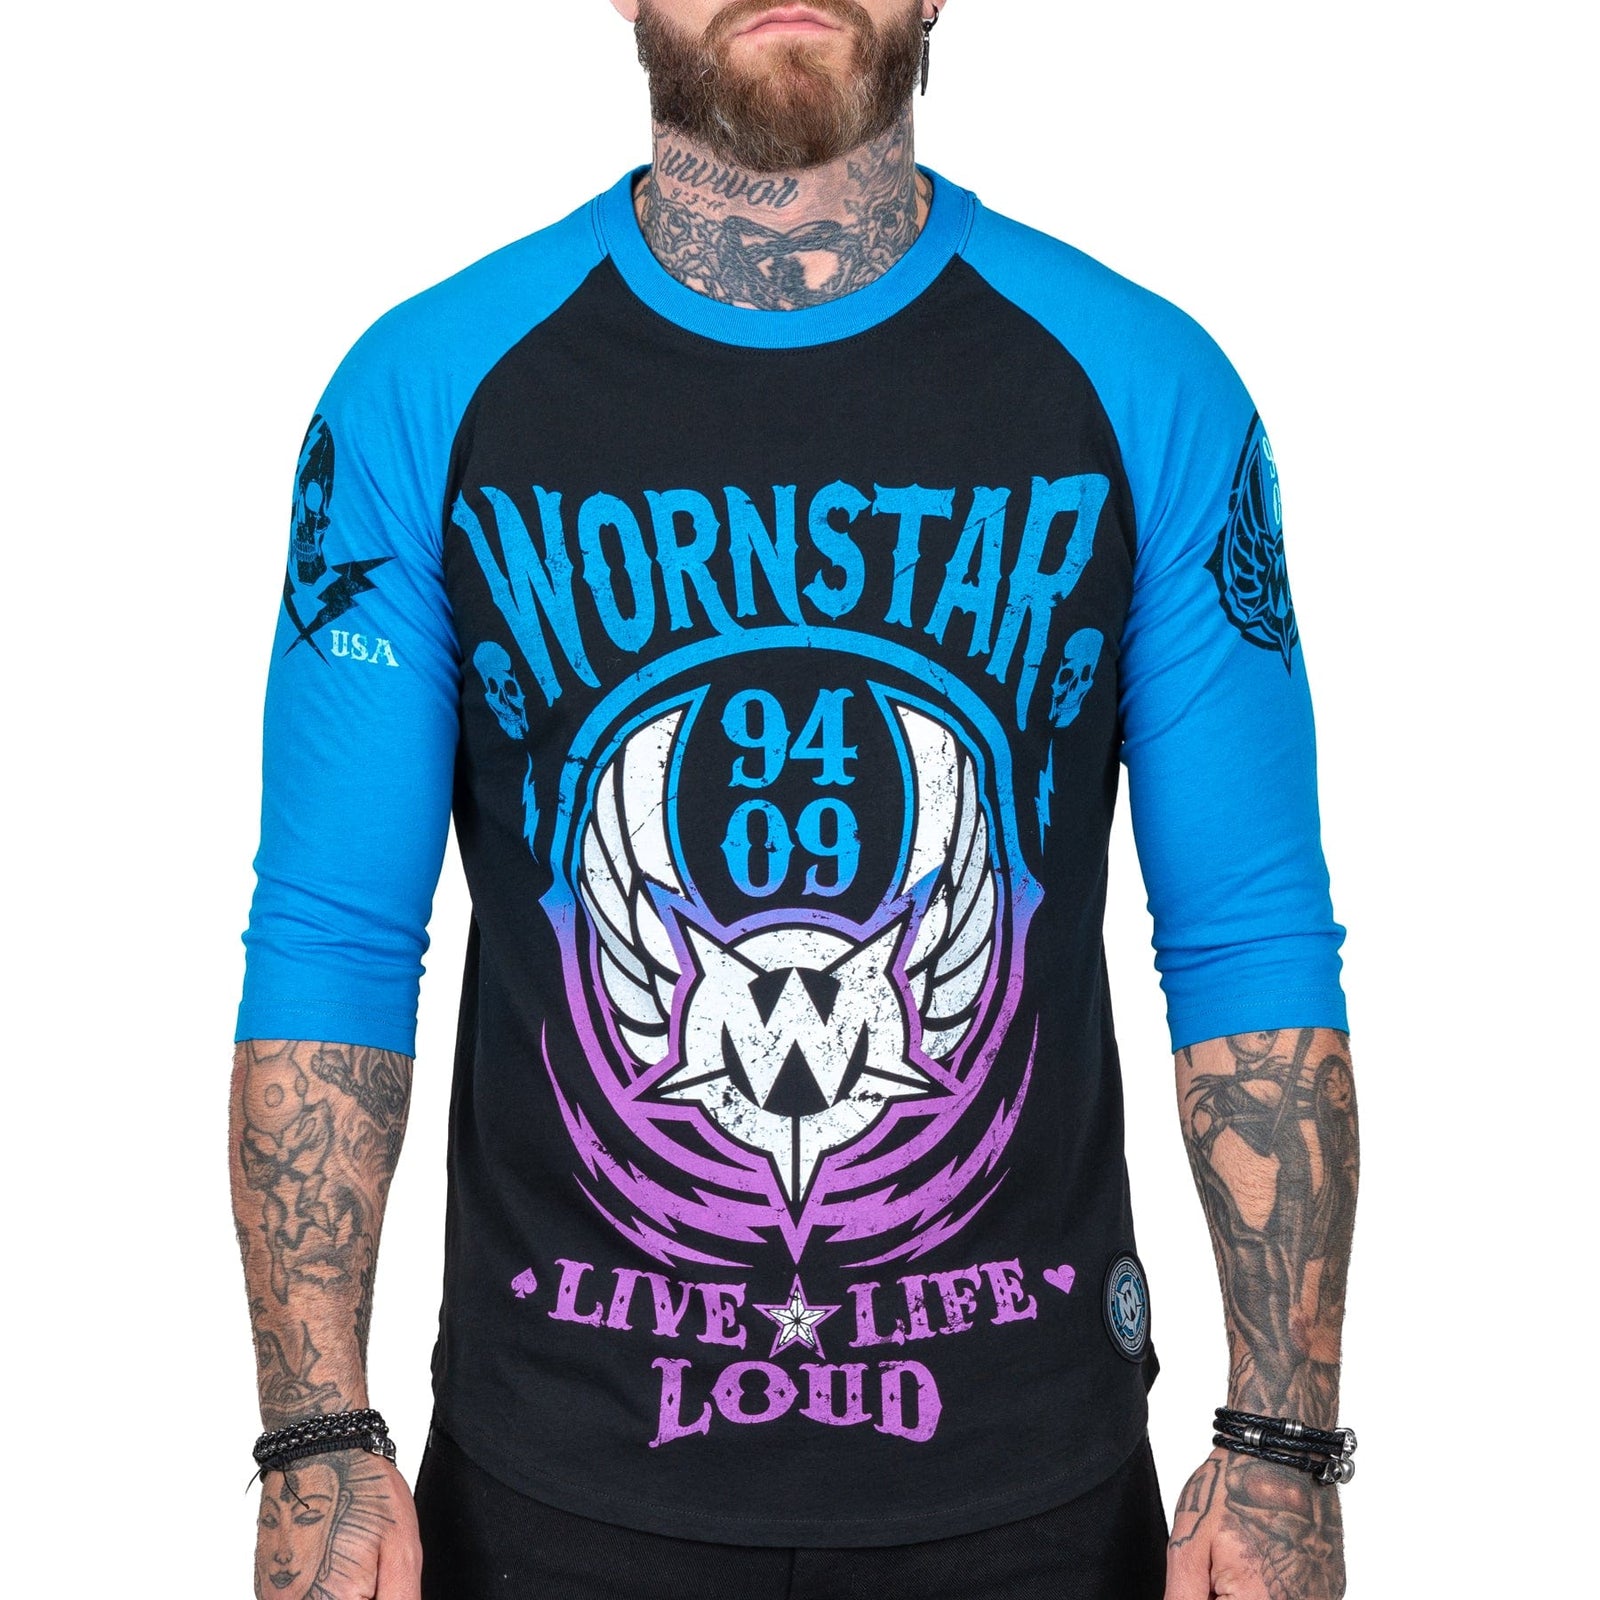 Wornstar Clothing Mens Tee. Live Life Loud Raglan T-Shirt - Blue/Black